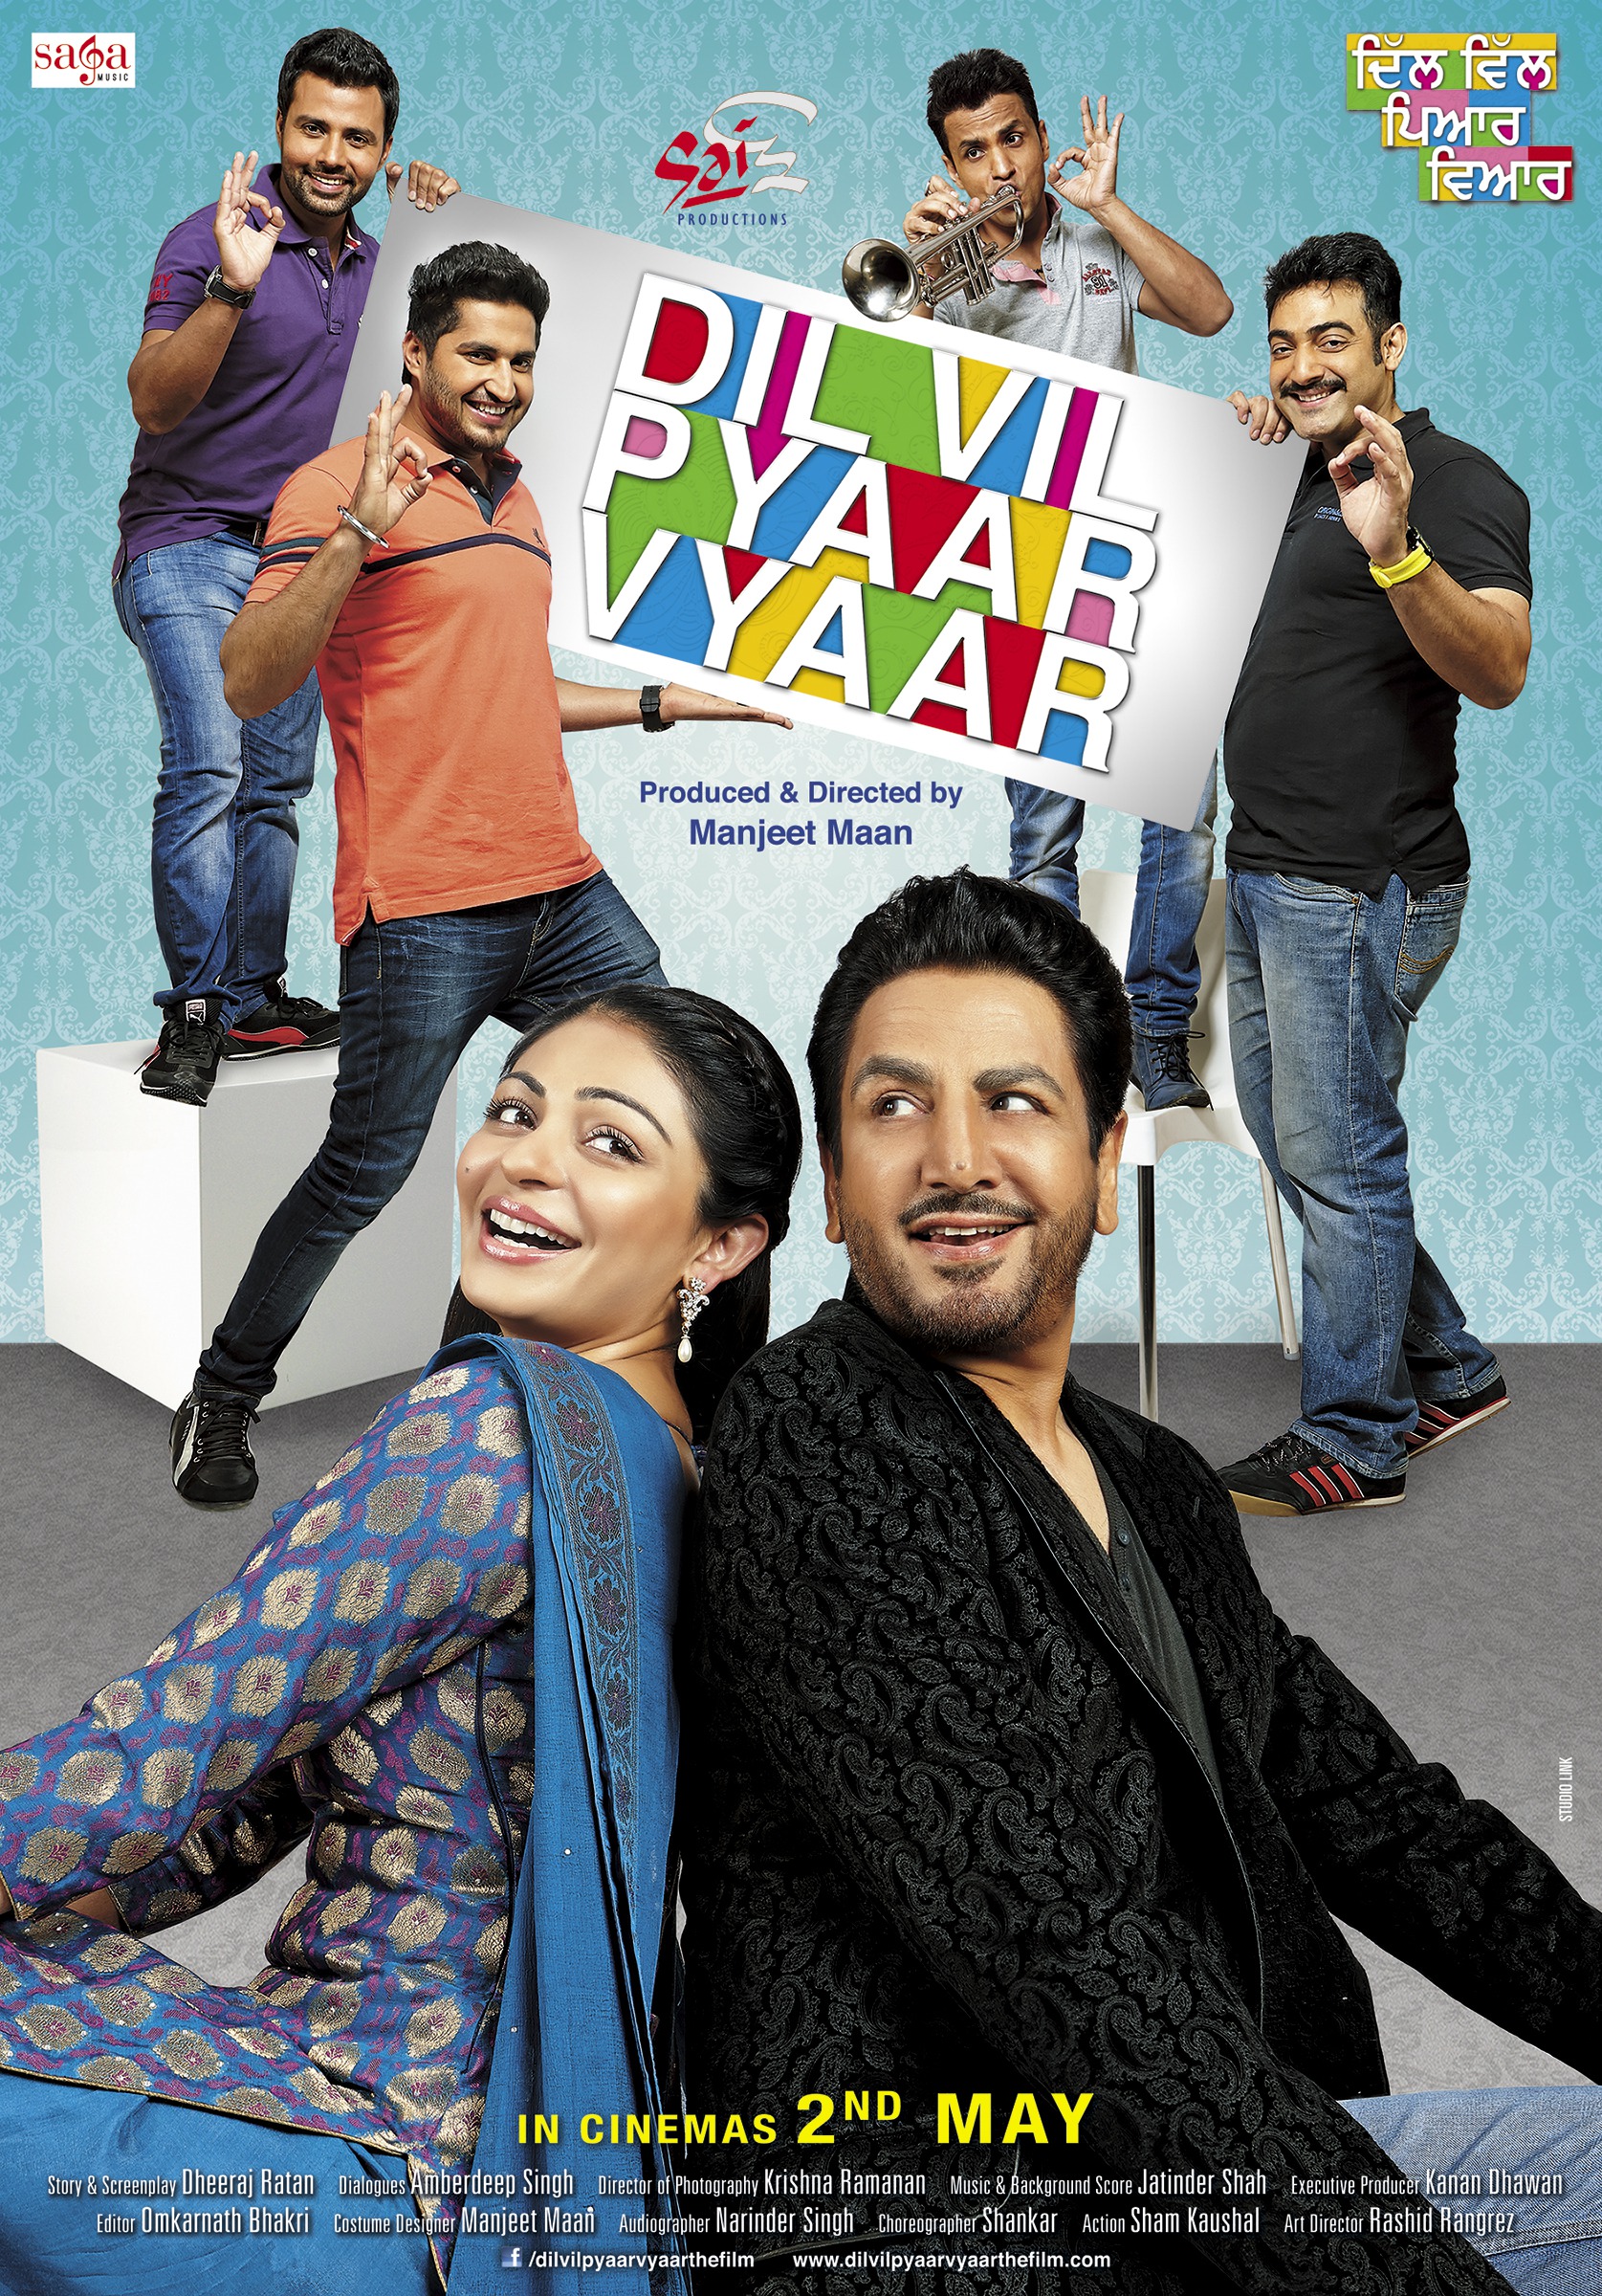 Mega Sized Movie Poster Image for Dil Vil Pyaar Vyaar (#1 of 3)